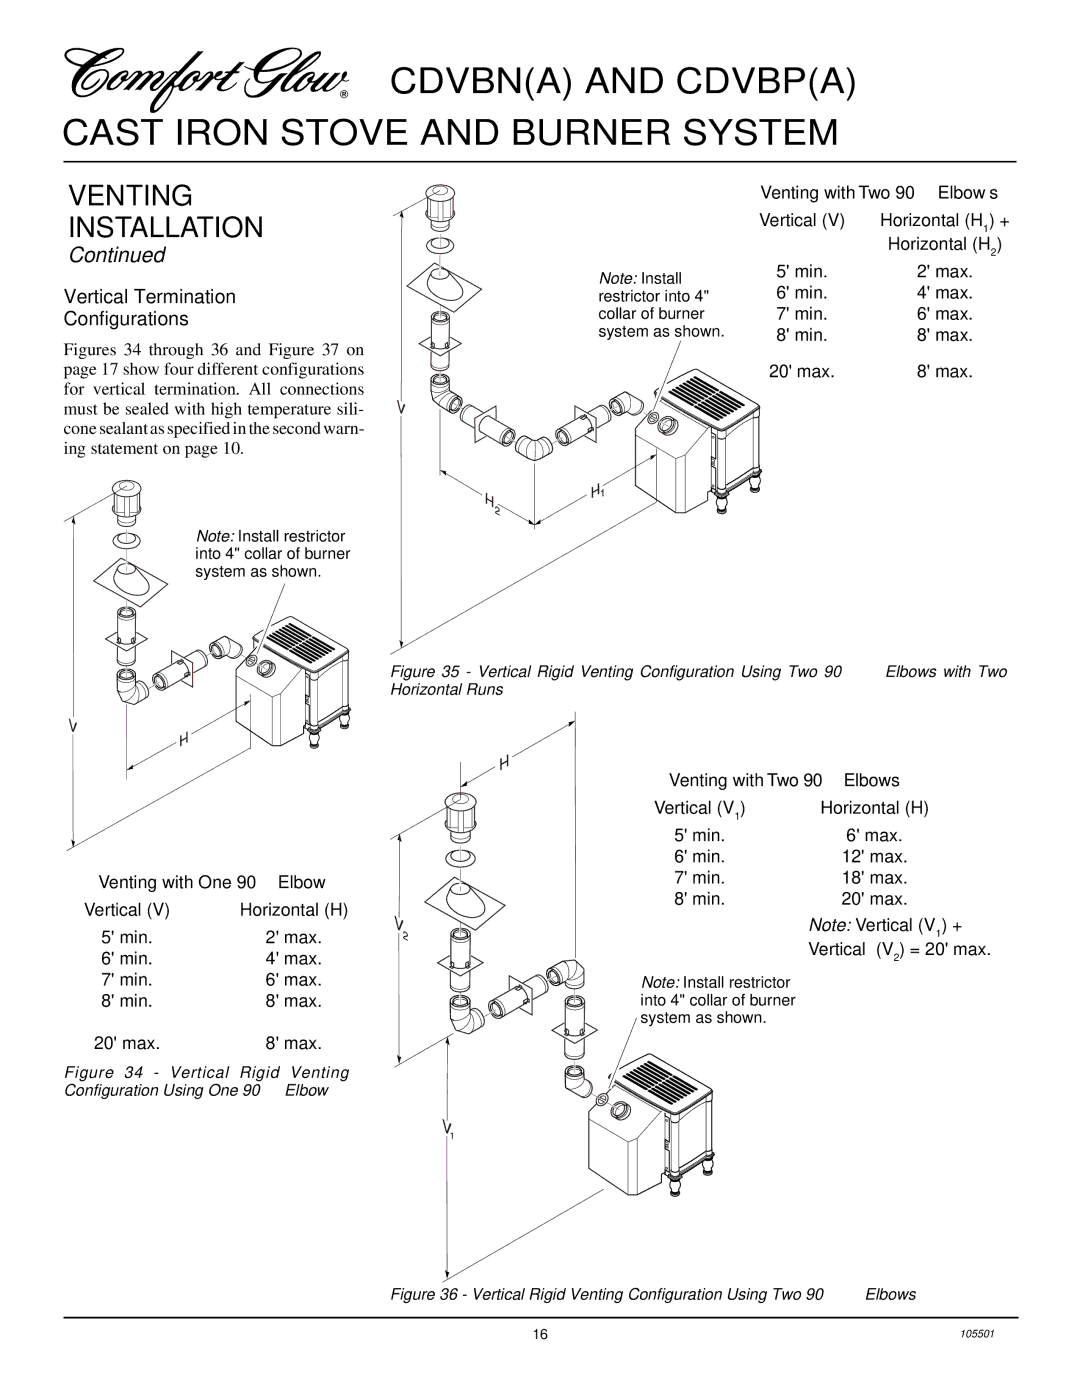 Desa CDVBN(A), CDVBP(A) Vertical Termination Configurations, Restrictor into, Collar of burner, System as shown 